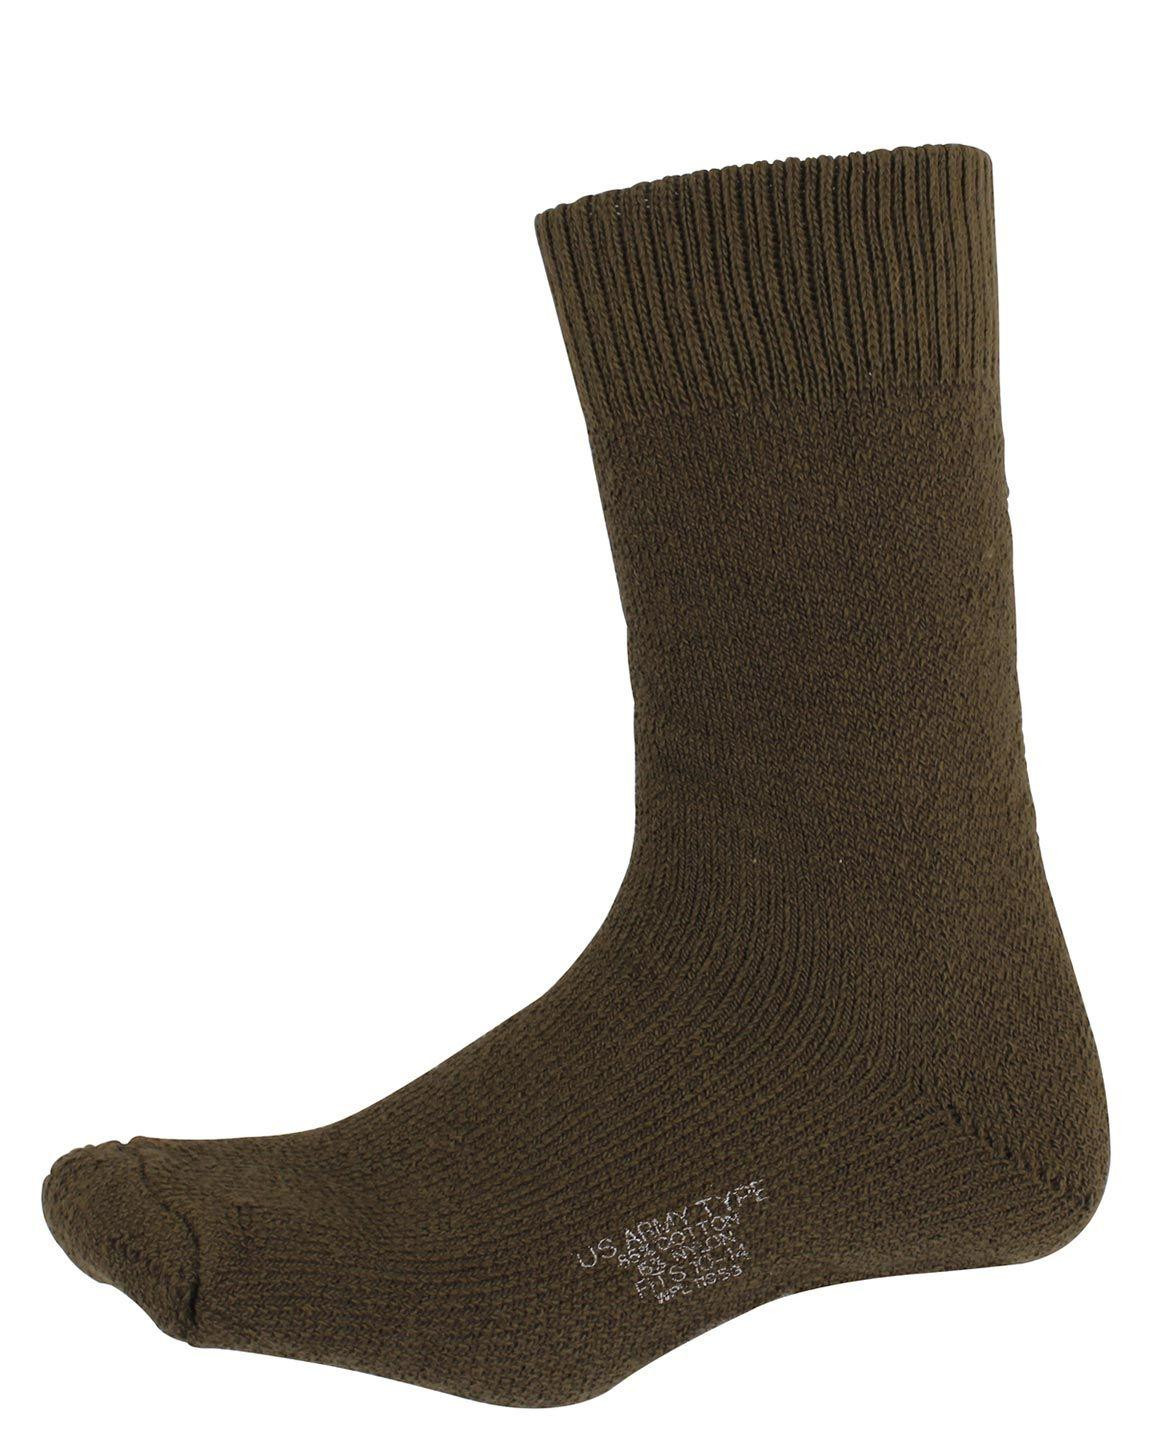 Brown Bear Polartec Fleece Winter Socks Outdoor Tactical Hiking Sport 281Z Military Warm 8 inch Boot Liner Socks